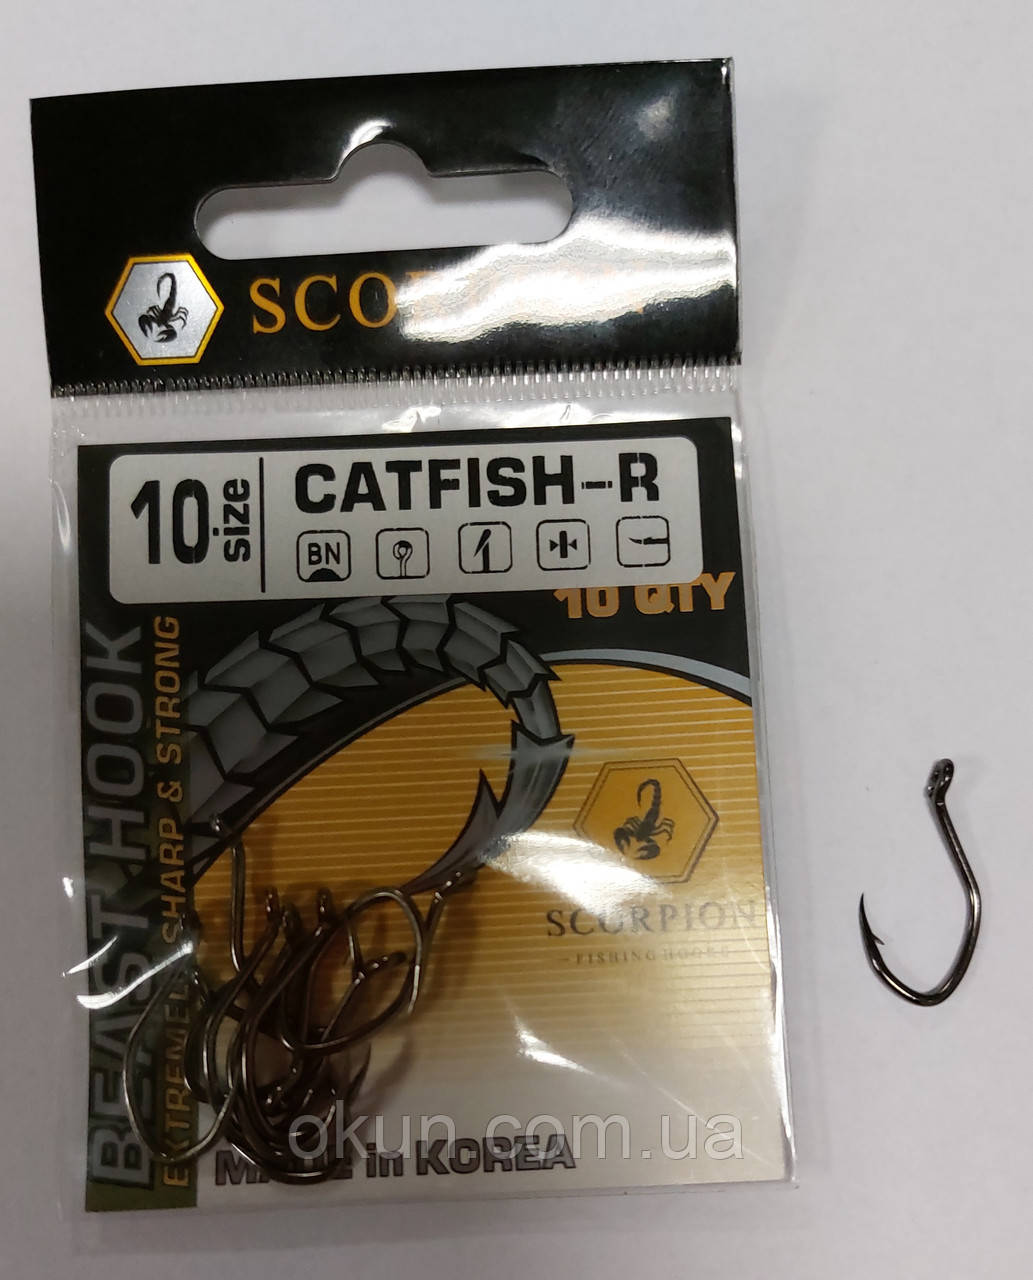 Гачки на сома Scorpion Catfish N10